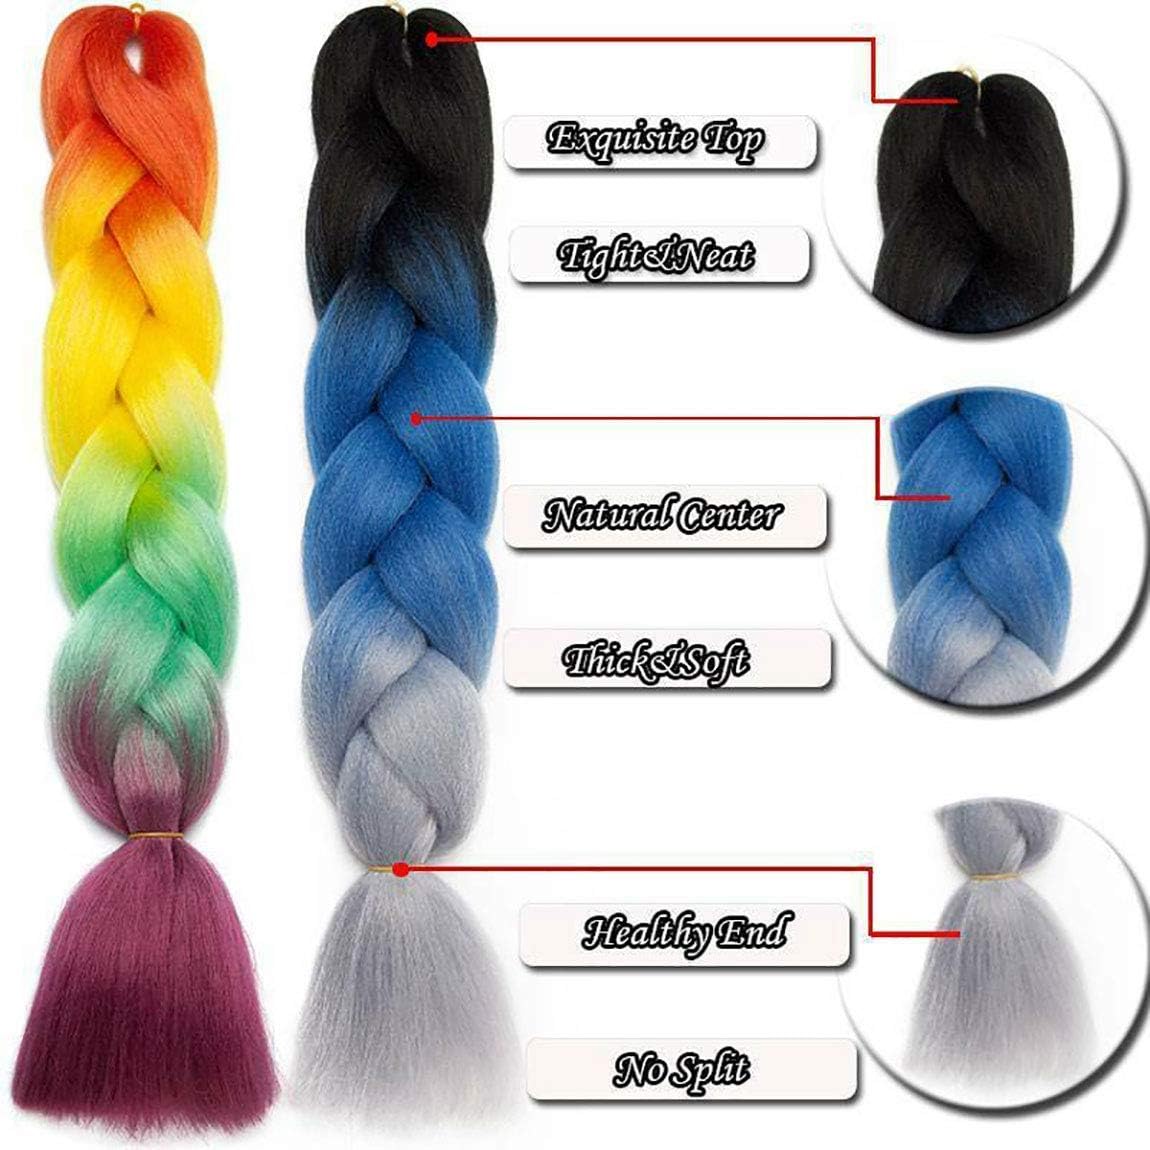 Synthetic Hair for Braiding, Jumbo Braids, Extension Afro Braids Crochet Twist, Heat Resistant 24 inch 3 Pcs(Sky Blue mix Light Puple)